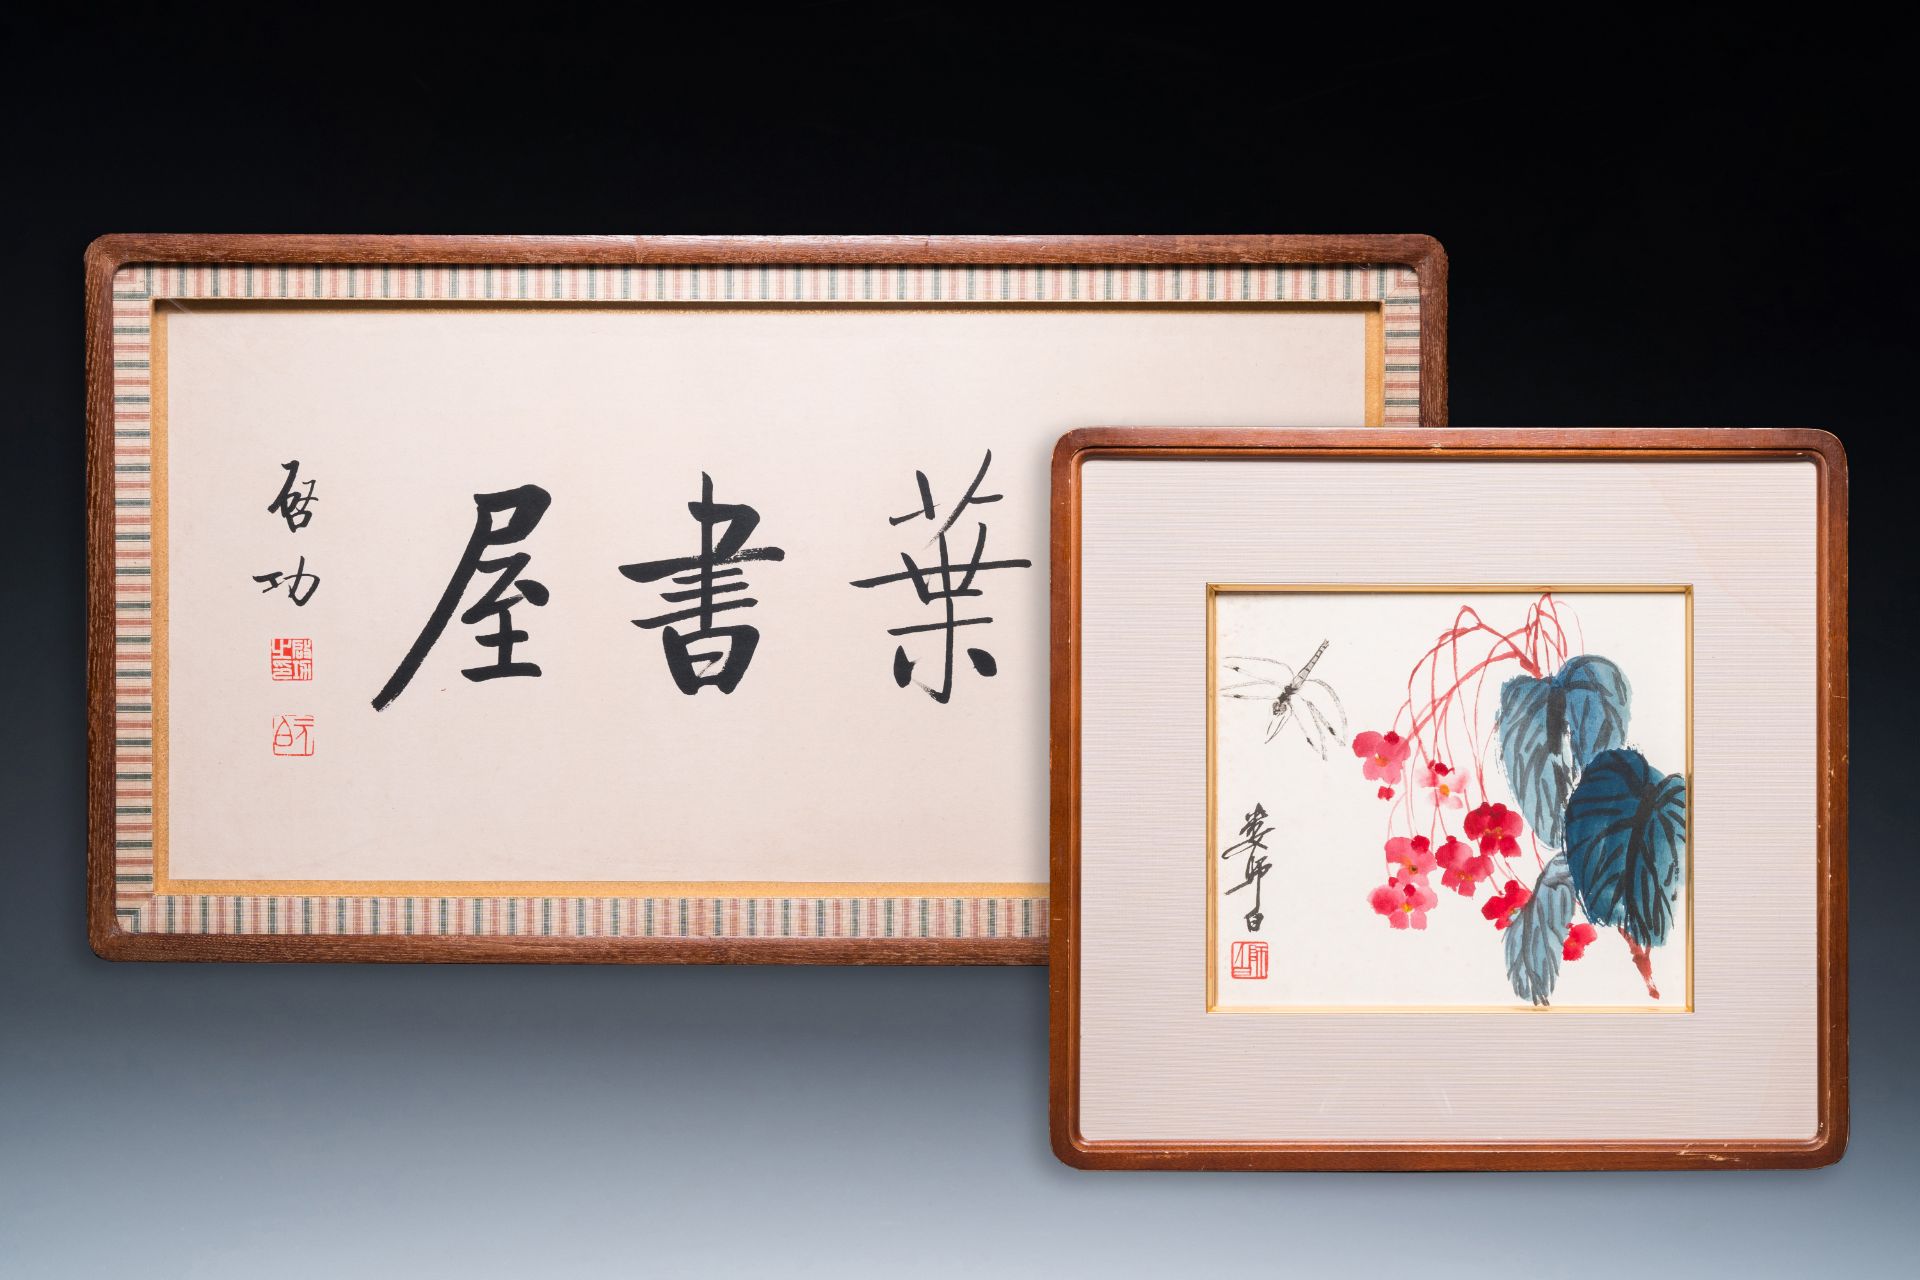 Lou Shibai å©å¸«ç™½ (1918-2010): 'Dragonfly and flowers' and Qi Gong å•ŸåŠŸ (1912-2005): 'Calligrap